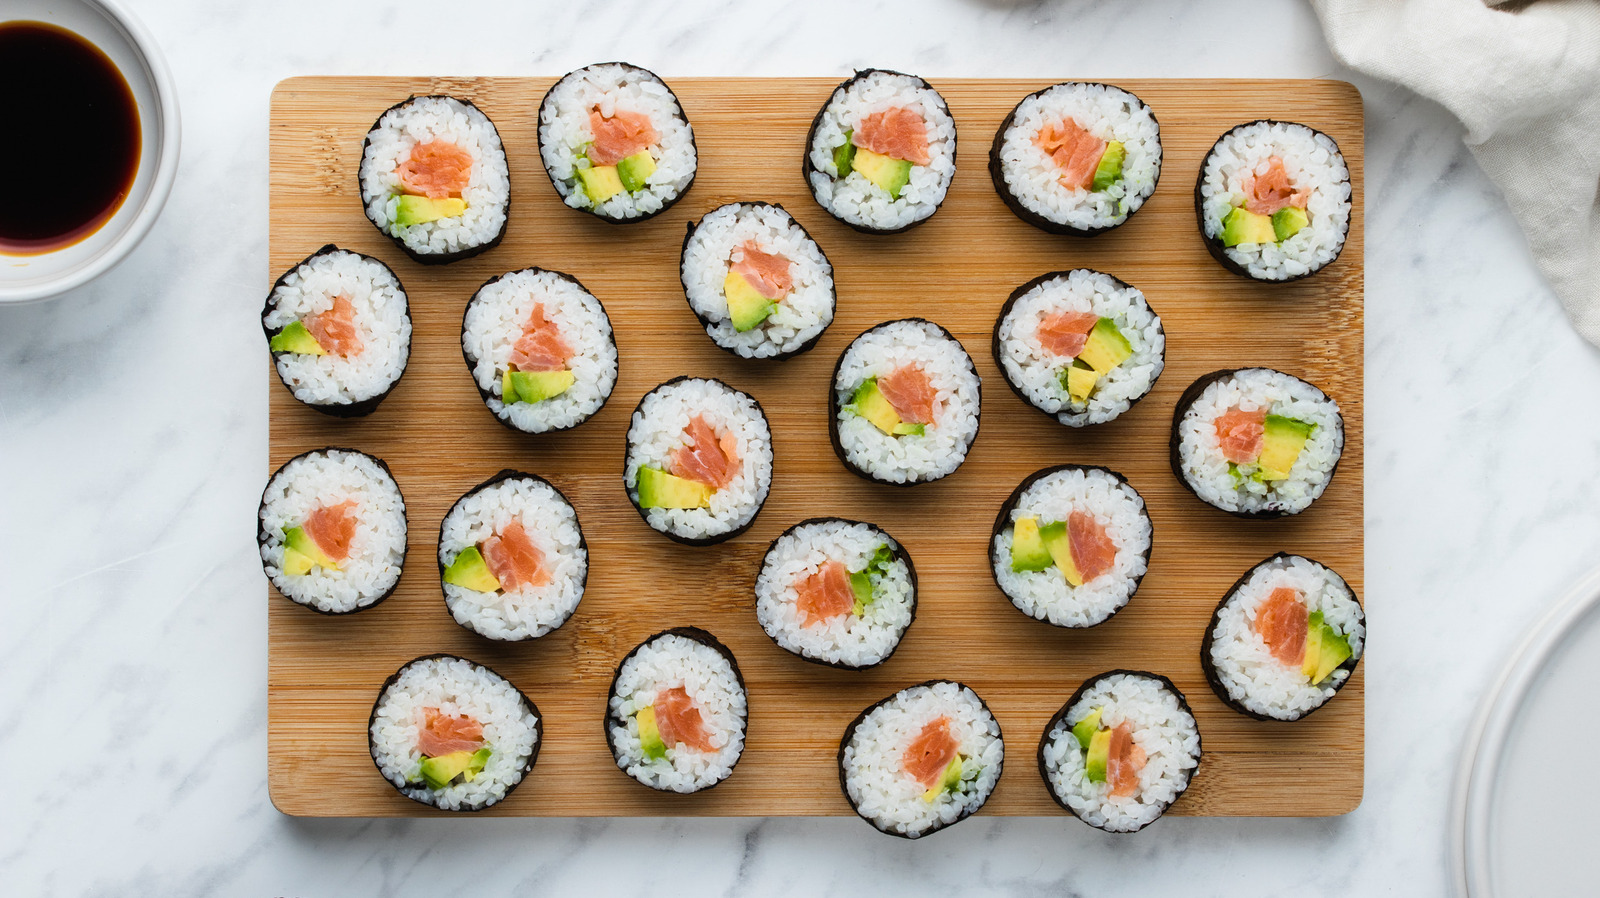 https://www.mashed.com/img/gallery/smoked-salmon-sushi-recipe/l-intro-1647888806.jpg